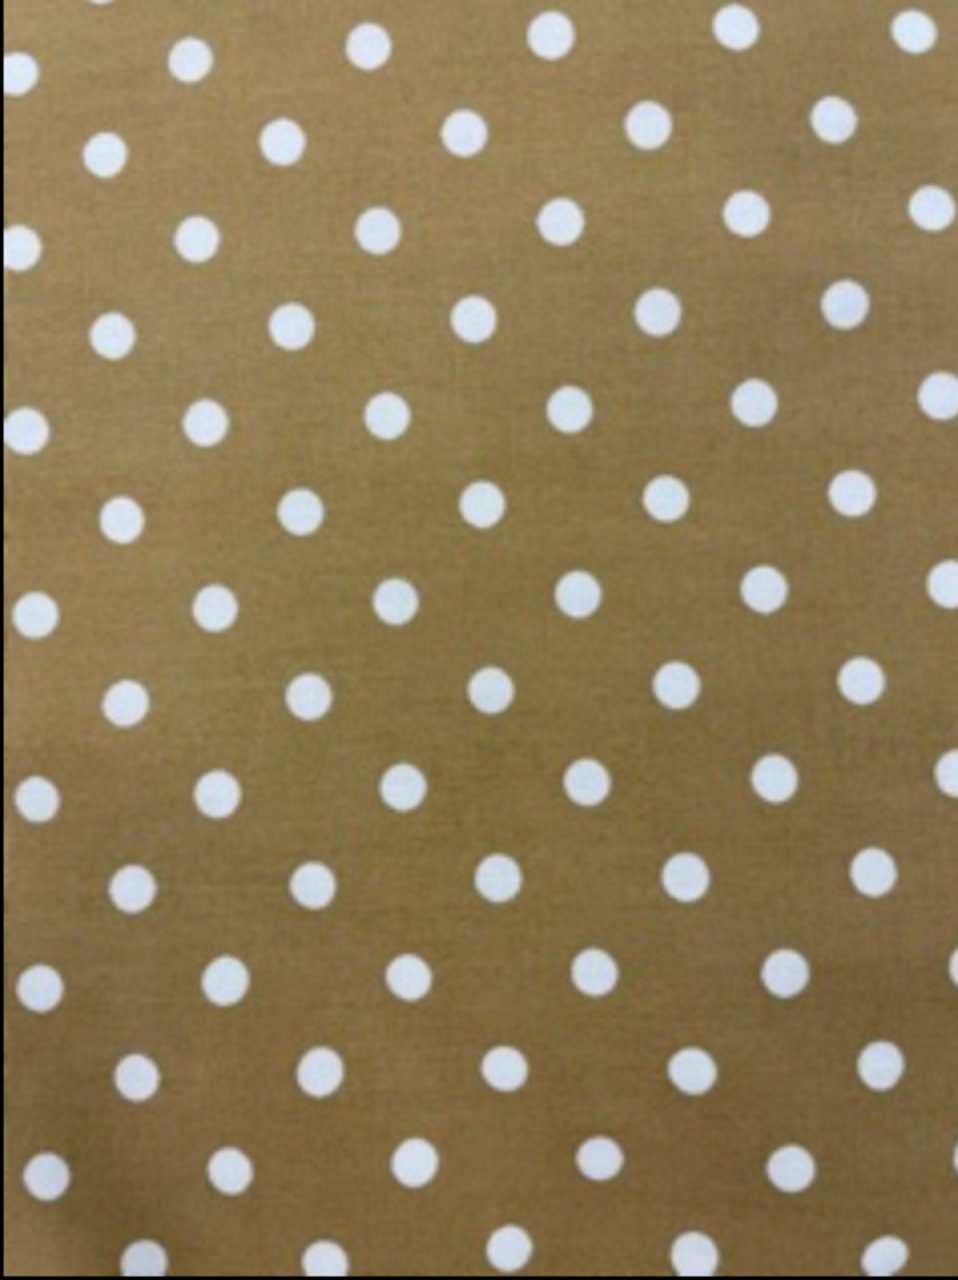 Studio E Paisley III Khaki & White 1/4" Polka Dot Cotton Fabric By The Yard